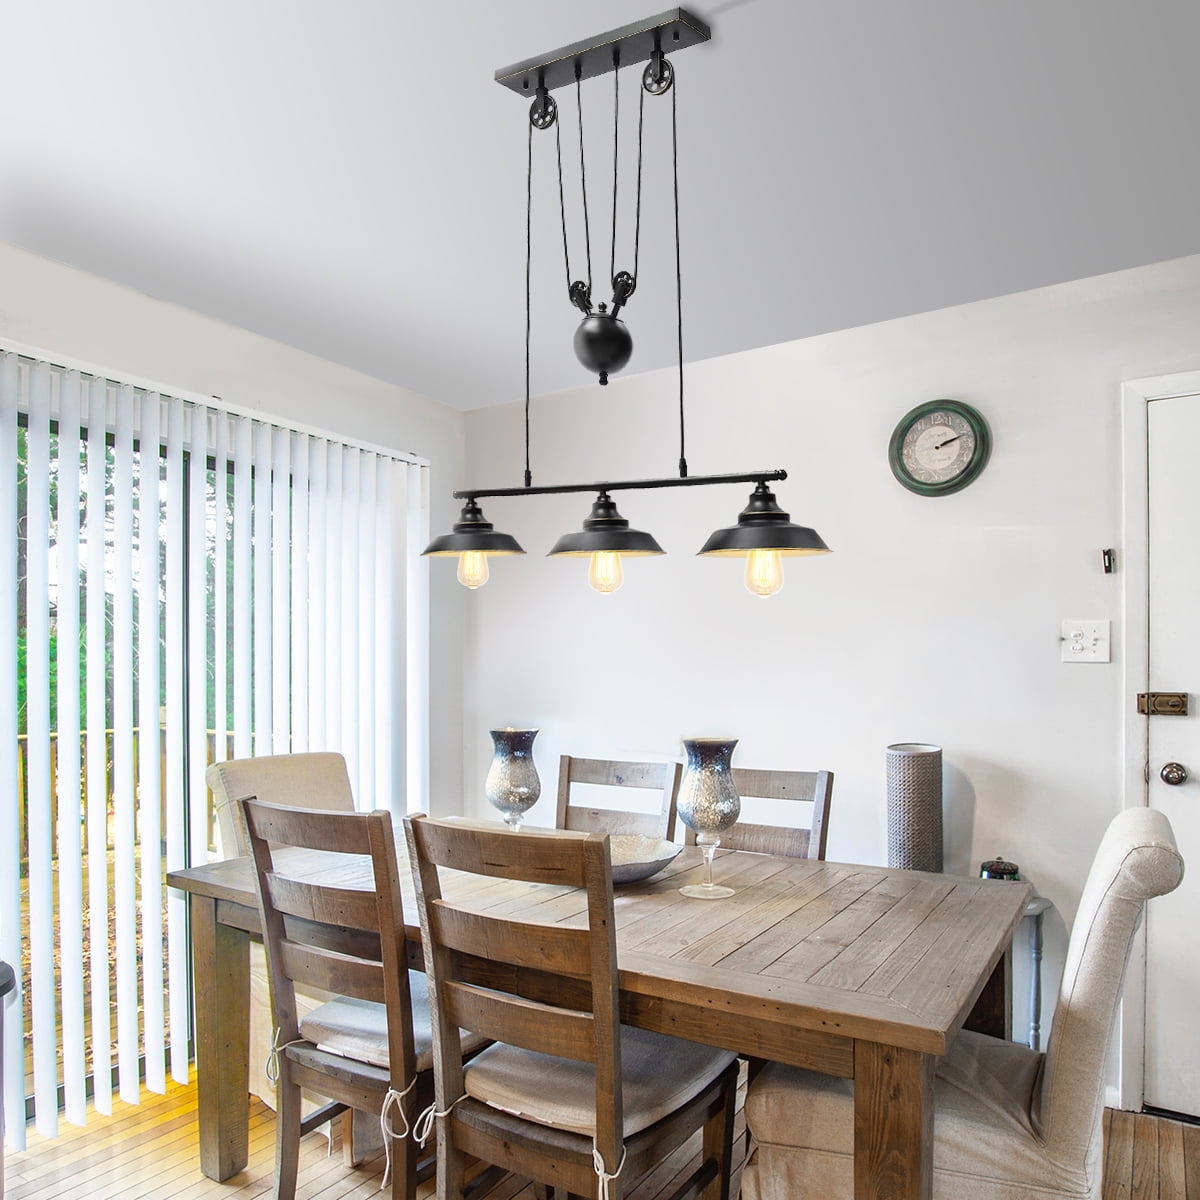 S More Three Light Indoor Island, Farmhouse Light Fixtures Above Kitchen Table